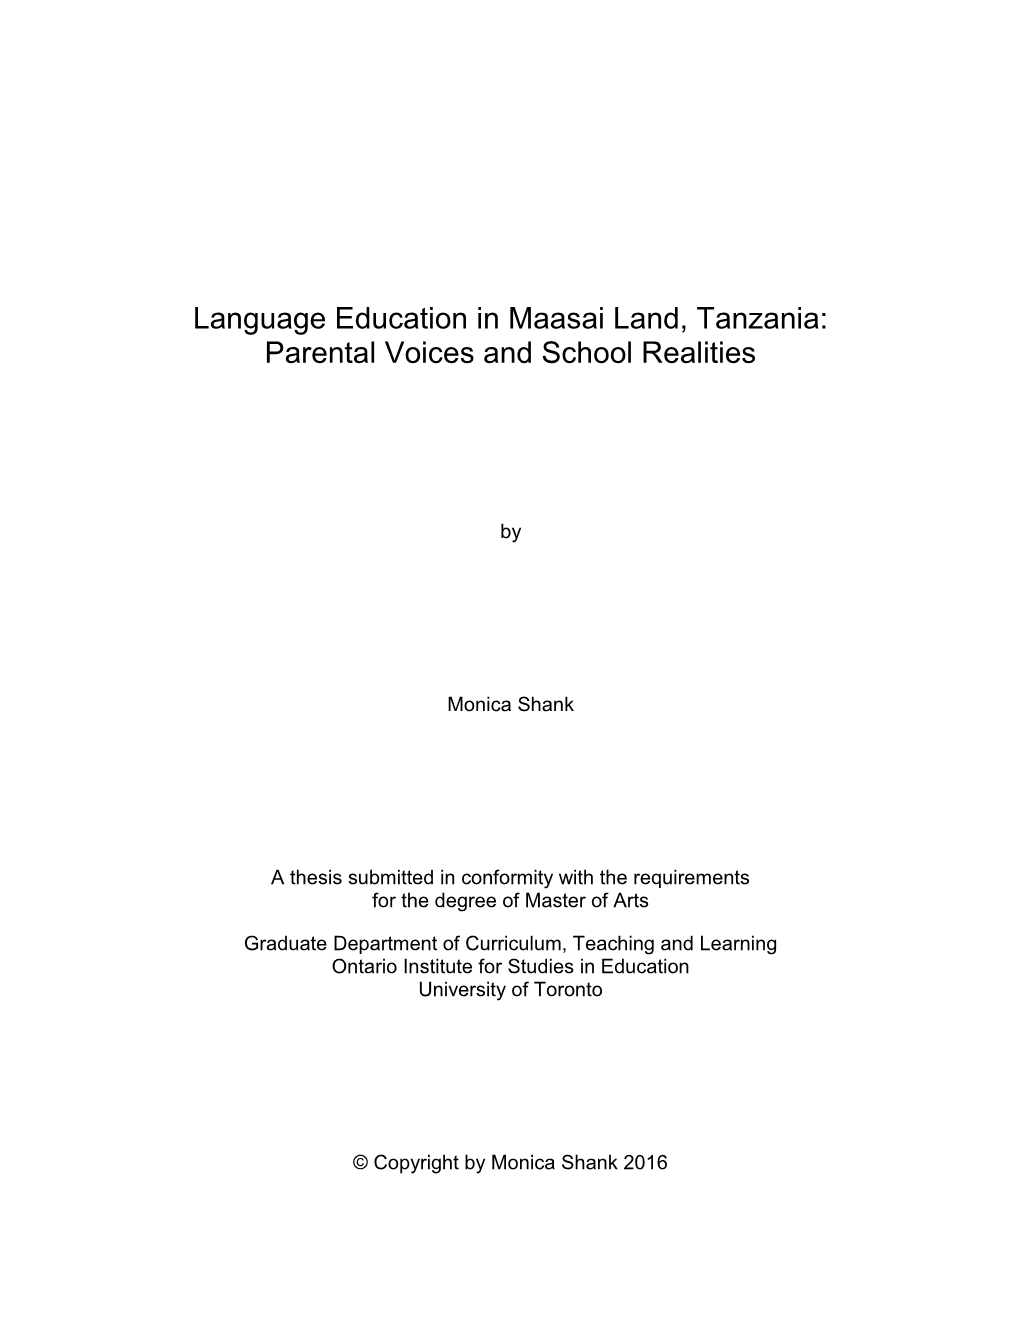 Language Education in Maasai Land, Tanzania: Parental Voices and School Realities